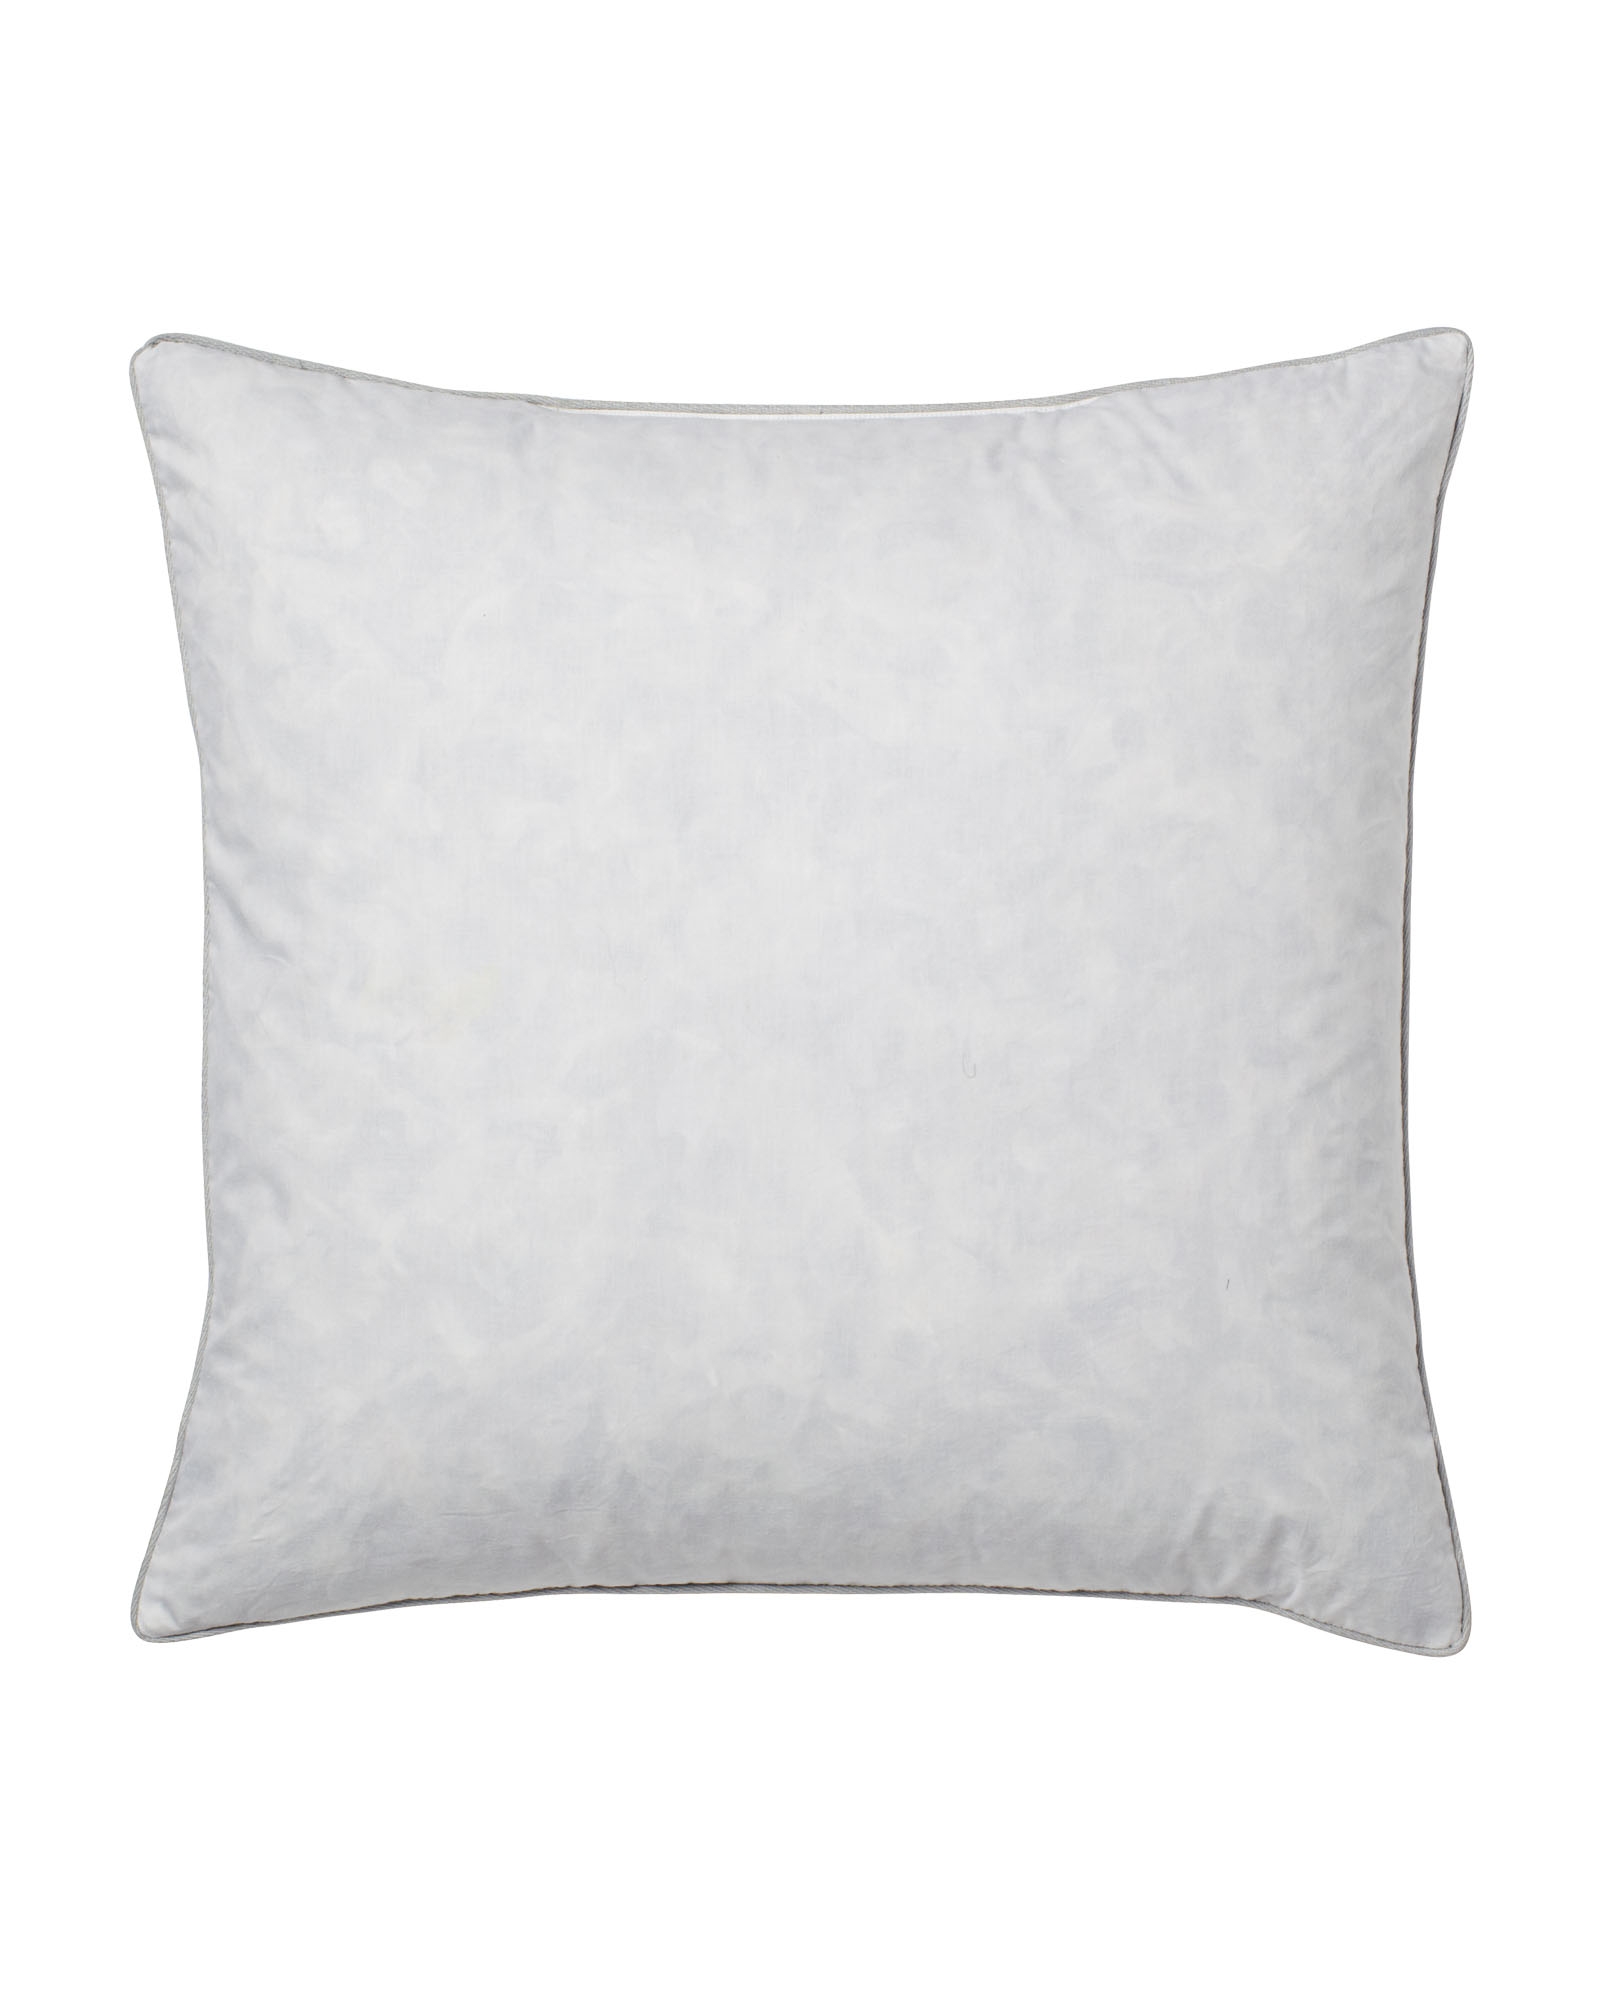 Pillow Insert - 20" sq - Image 0